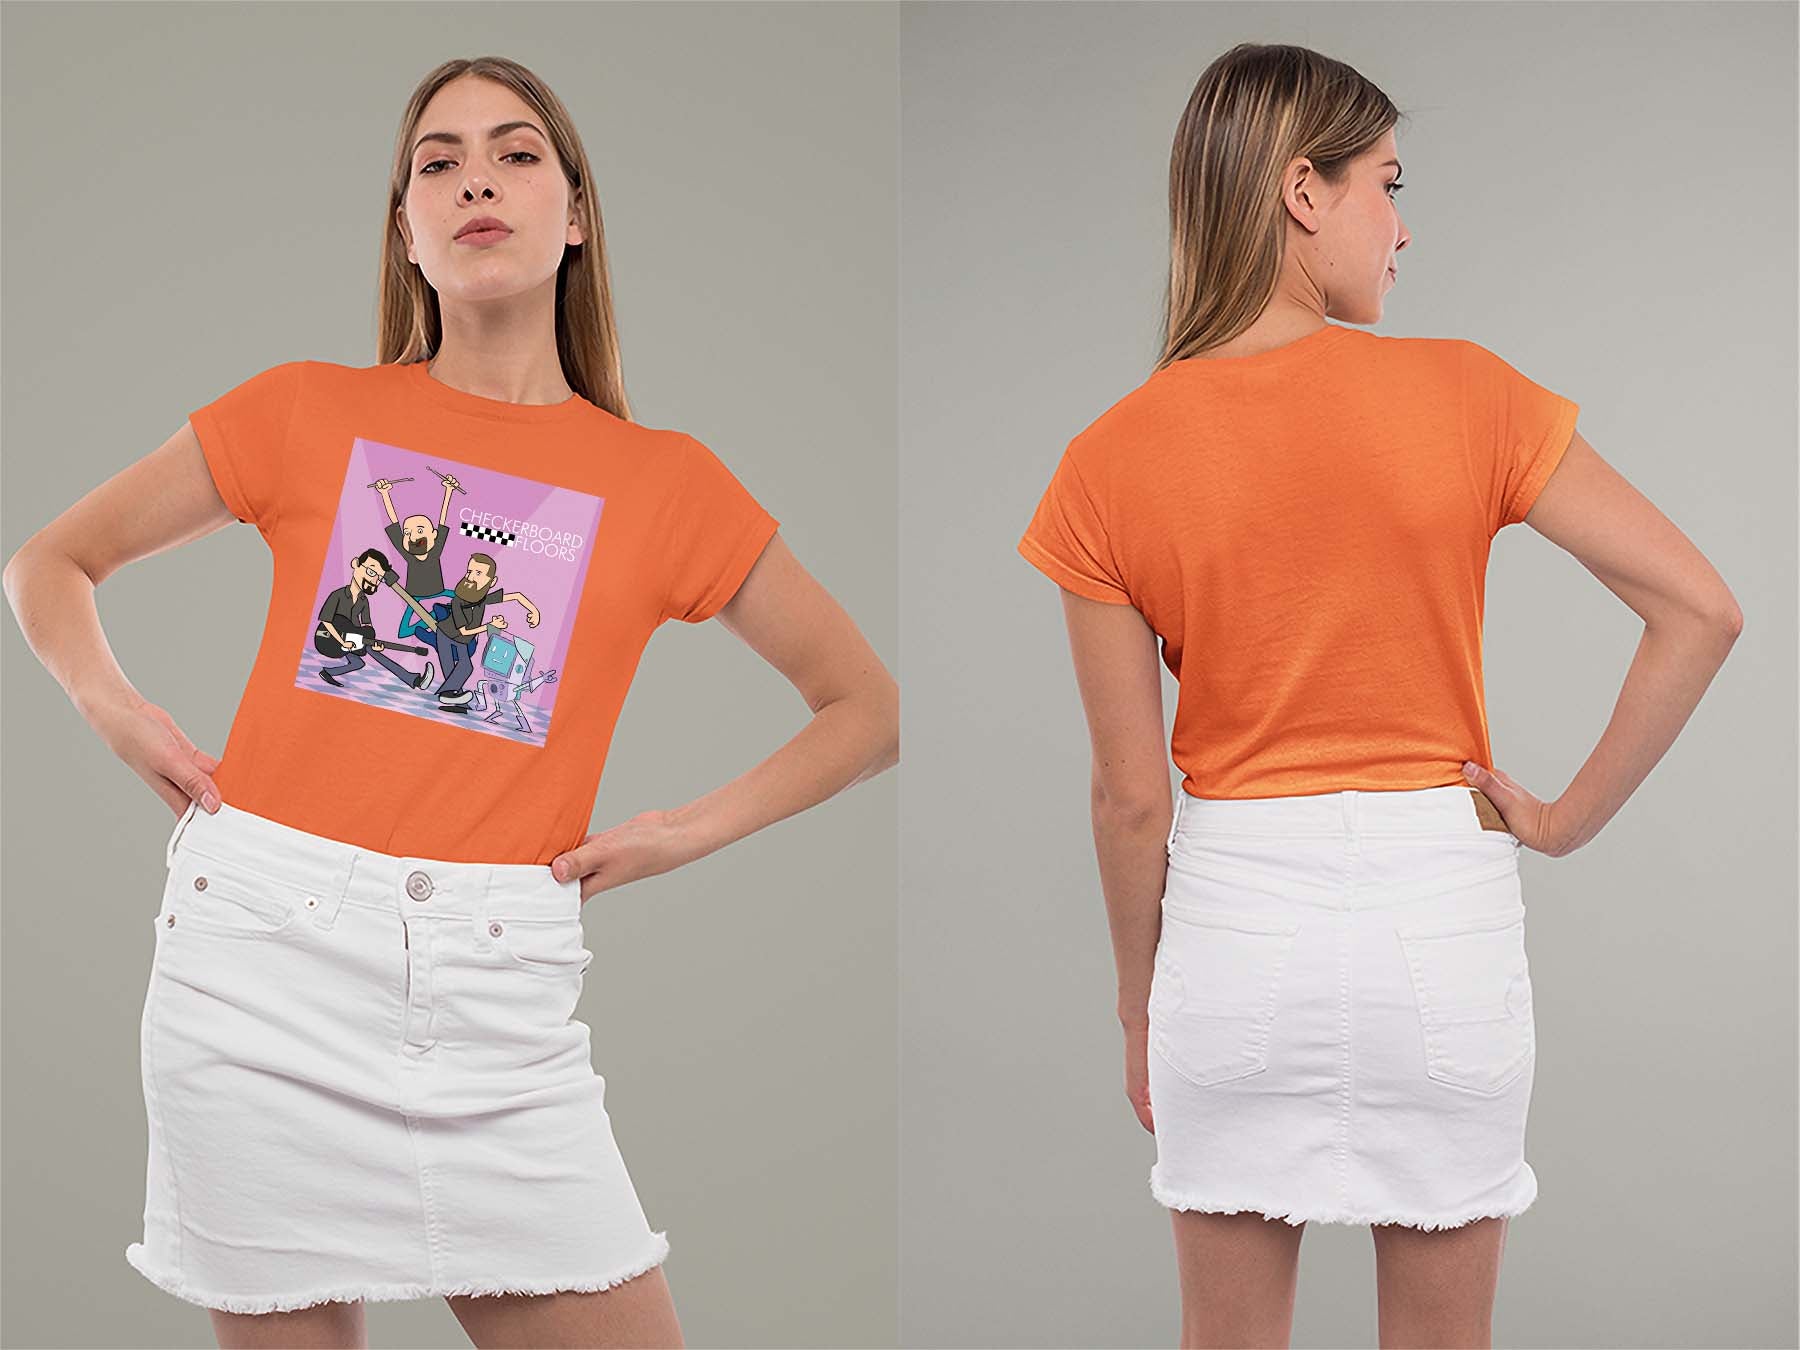 Band Cartoon '23 Ladies Crew (Round) Neck Shirt Small Orange